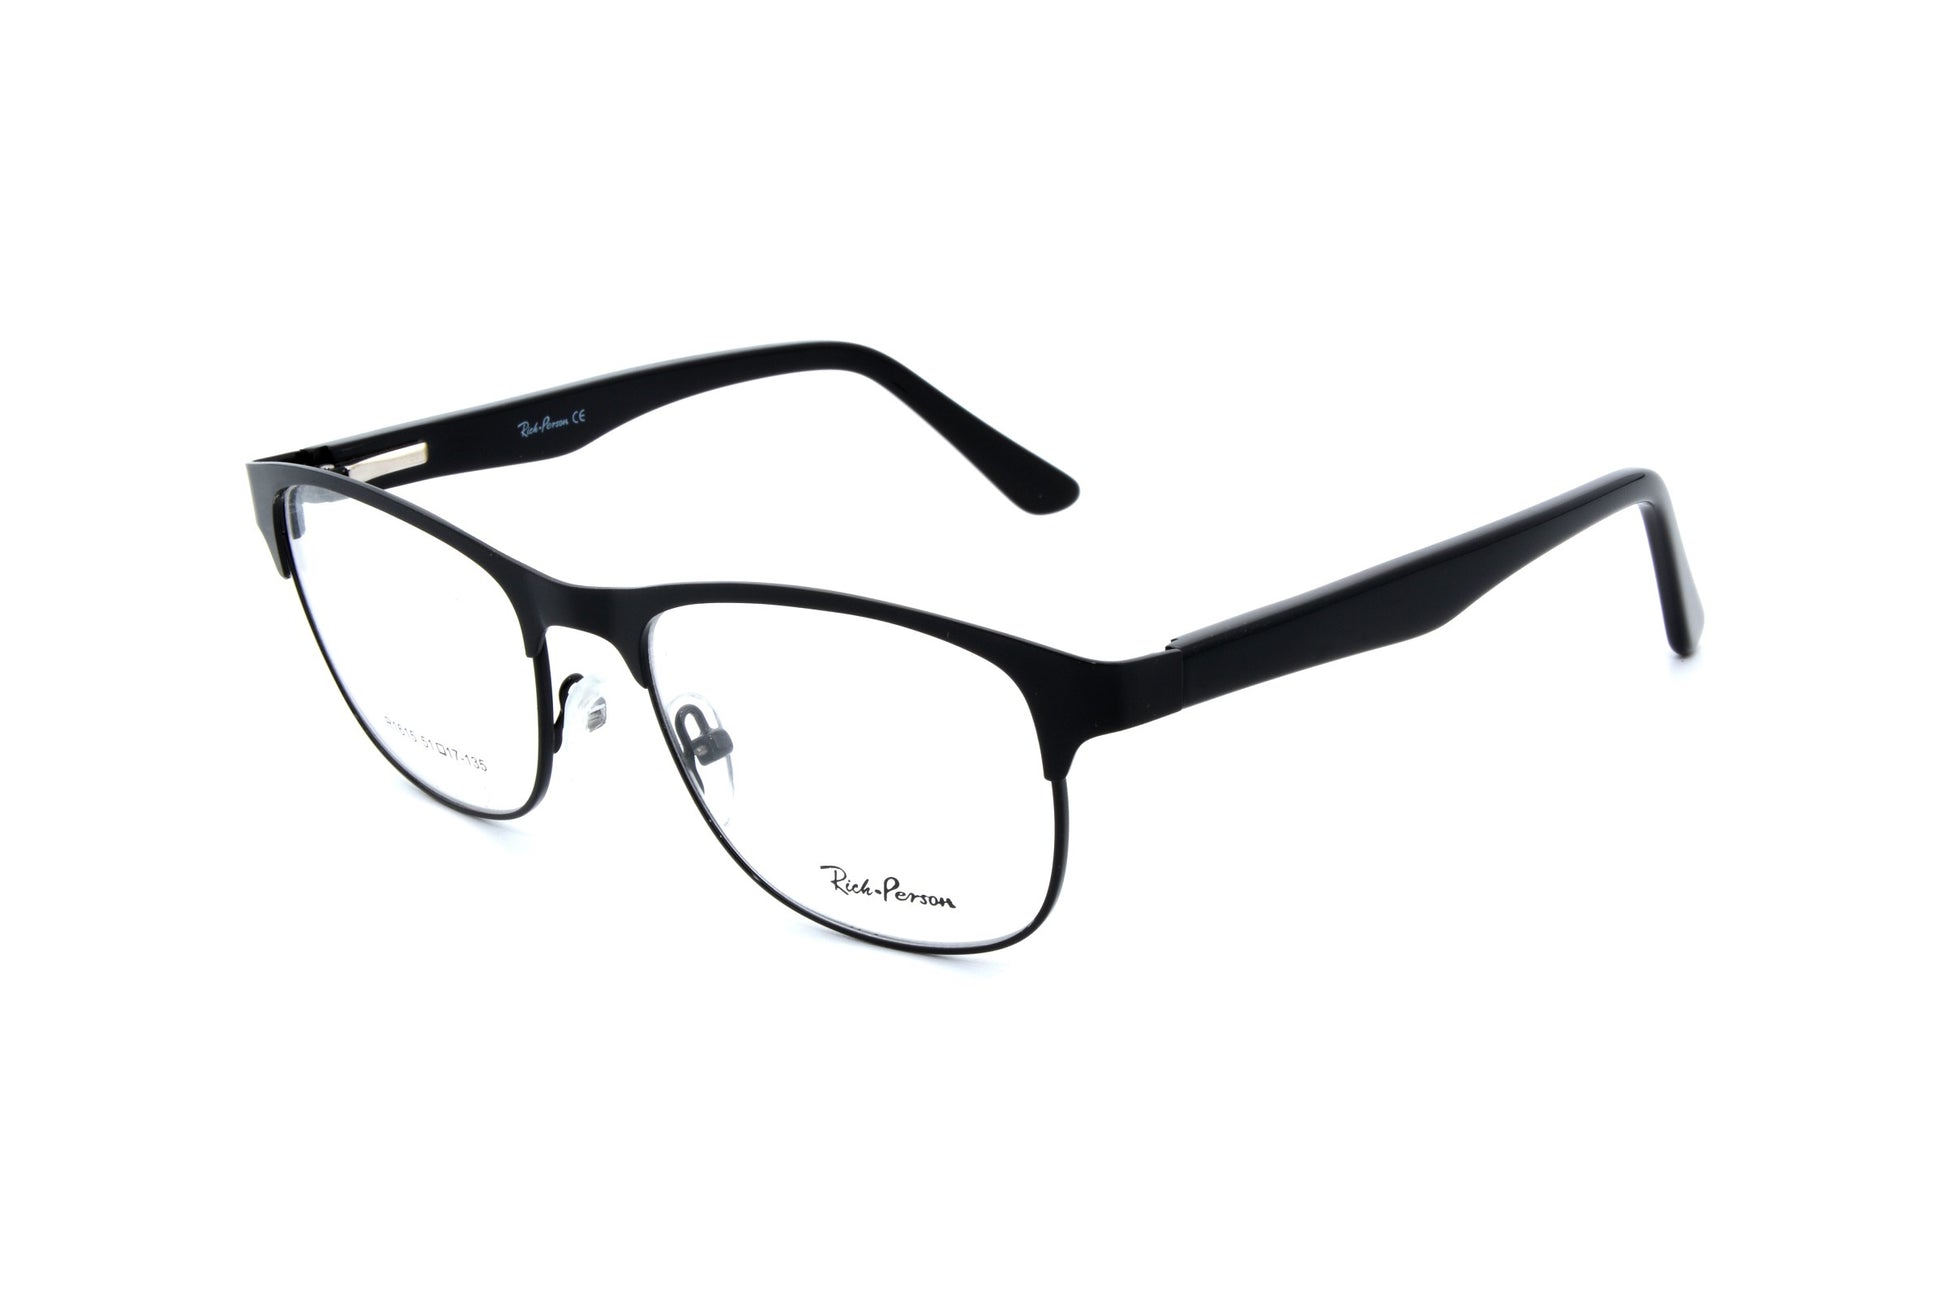 Rich person eyewear R1615 C2 - Optics Trading